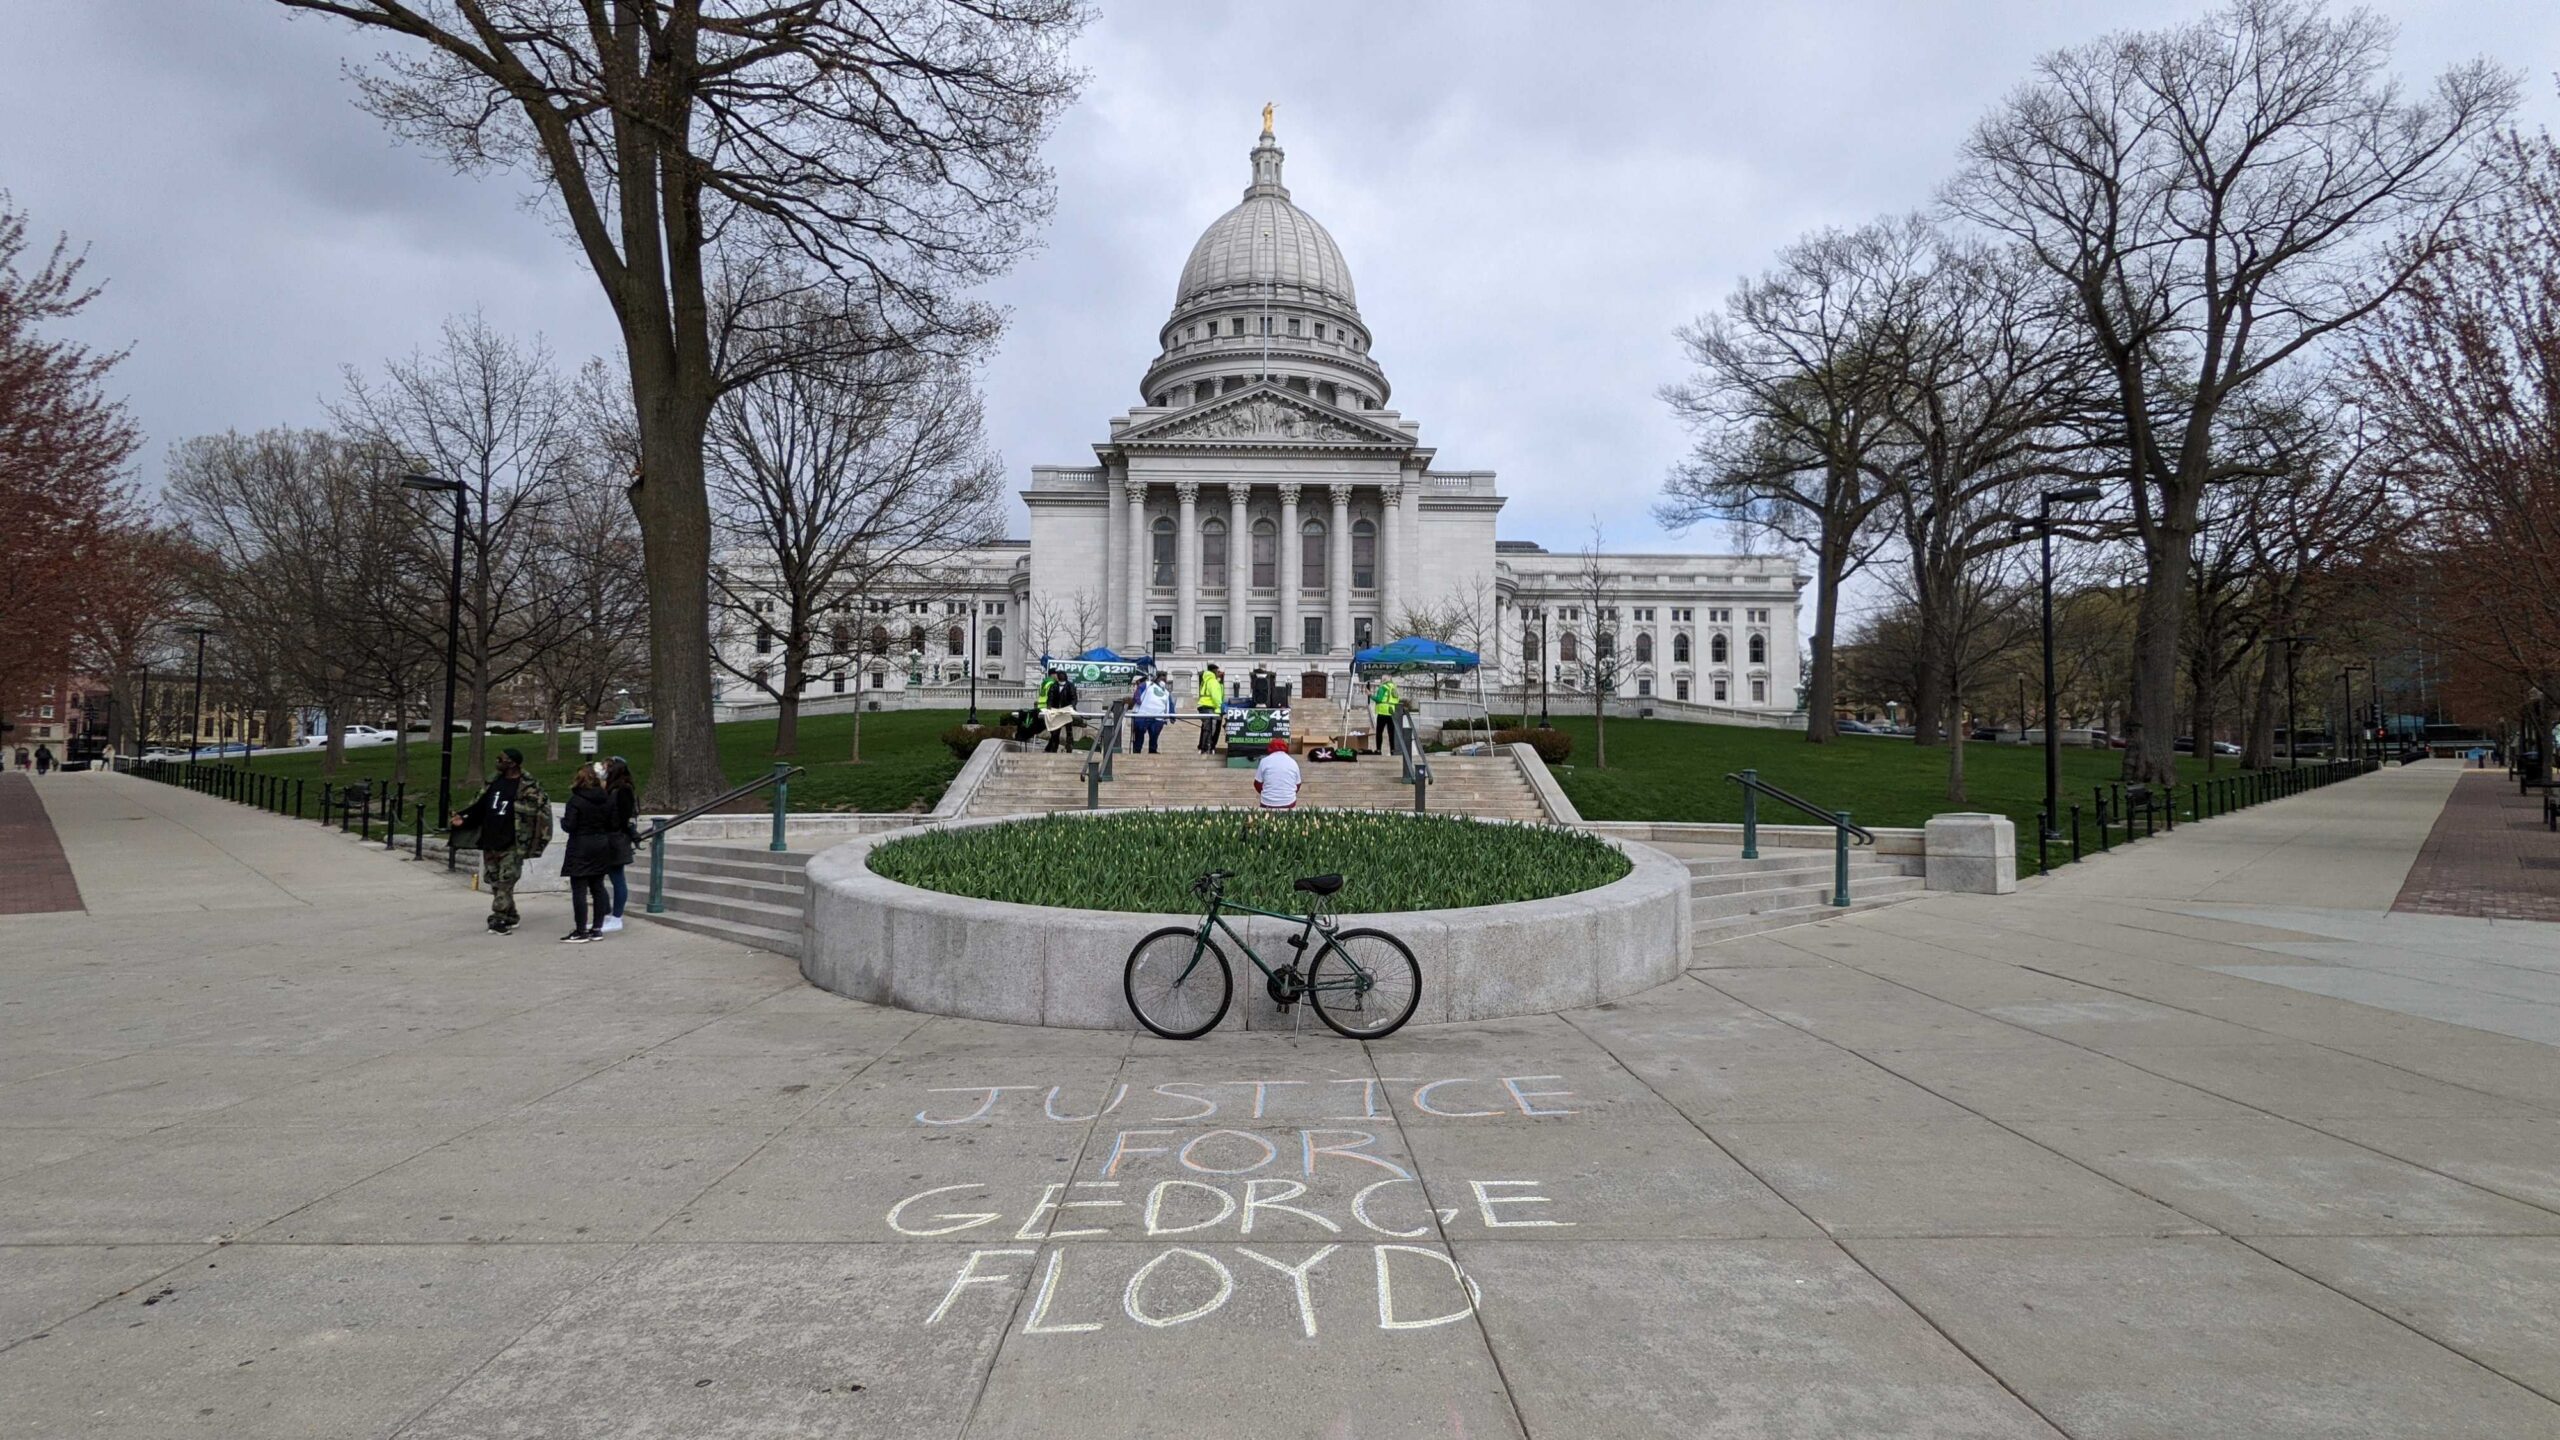 "Justice for George Floyd' written on the sidewalk in chalk